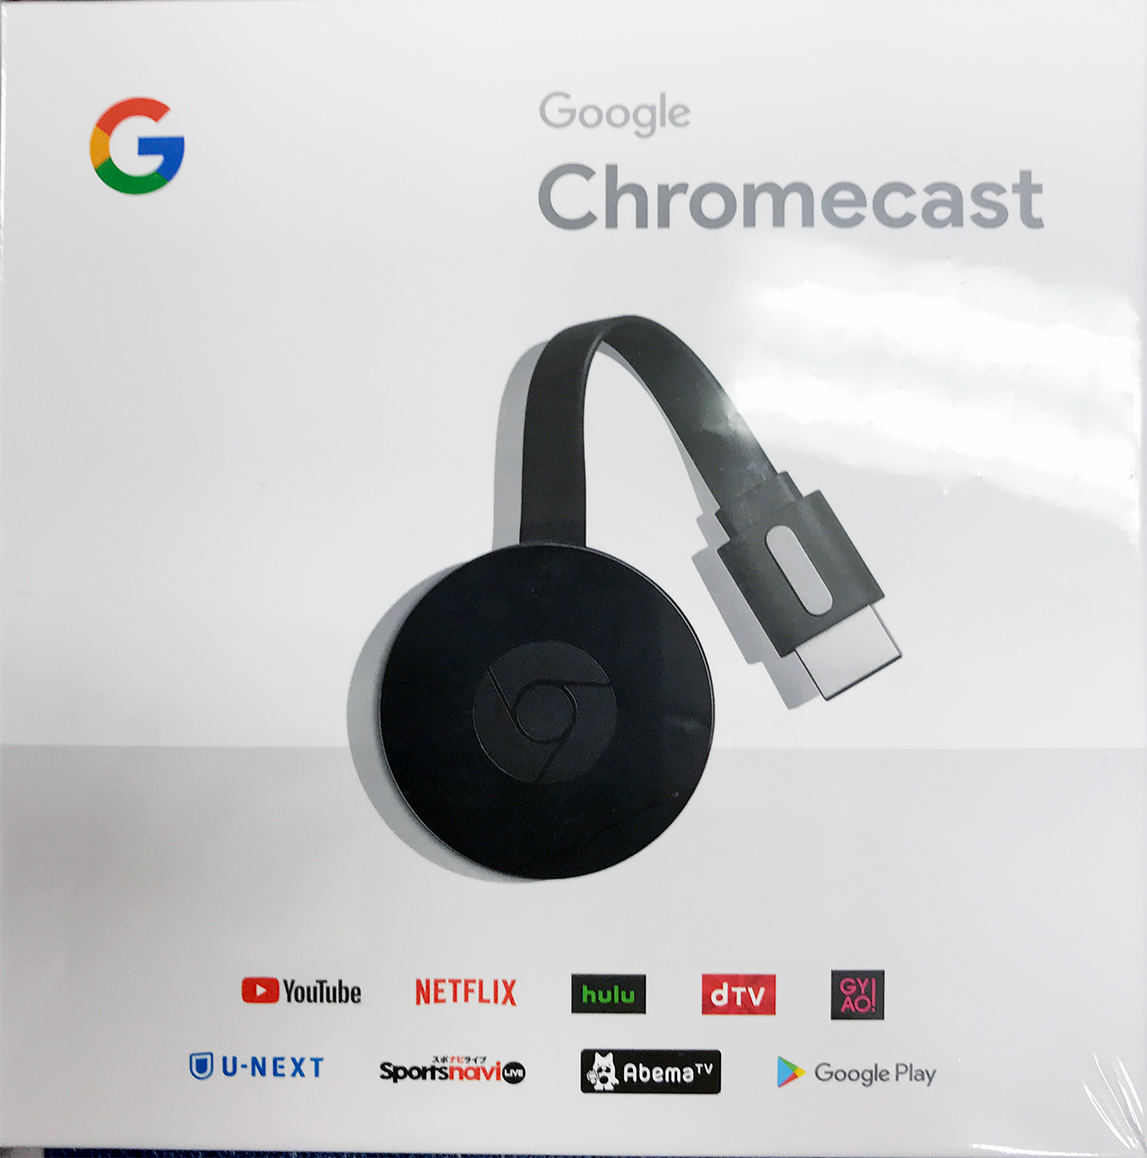 ★◇Google Chromecast GA3A00133A16Z01 [ブラック] (6730) 【ワイヤレスディスプレイアダプタ】【送料無料】